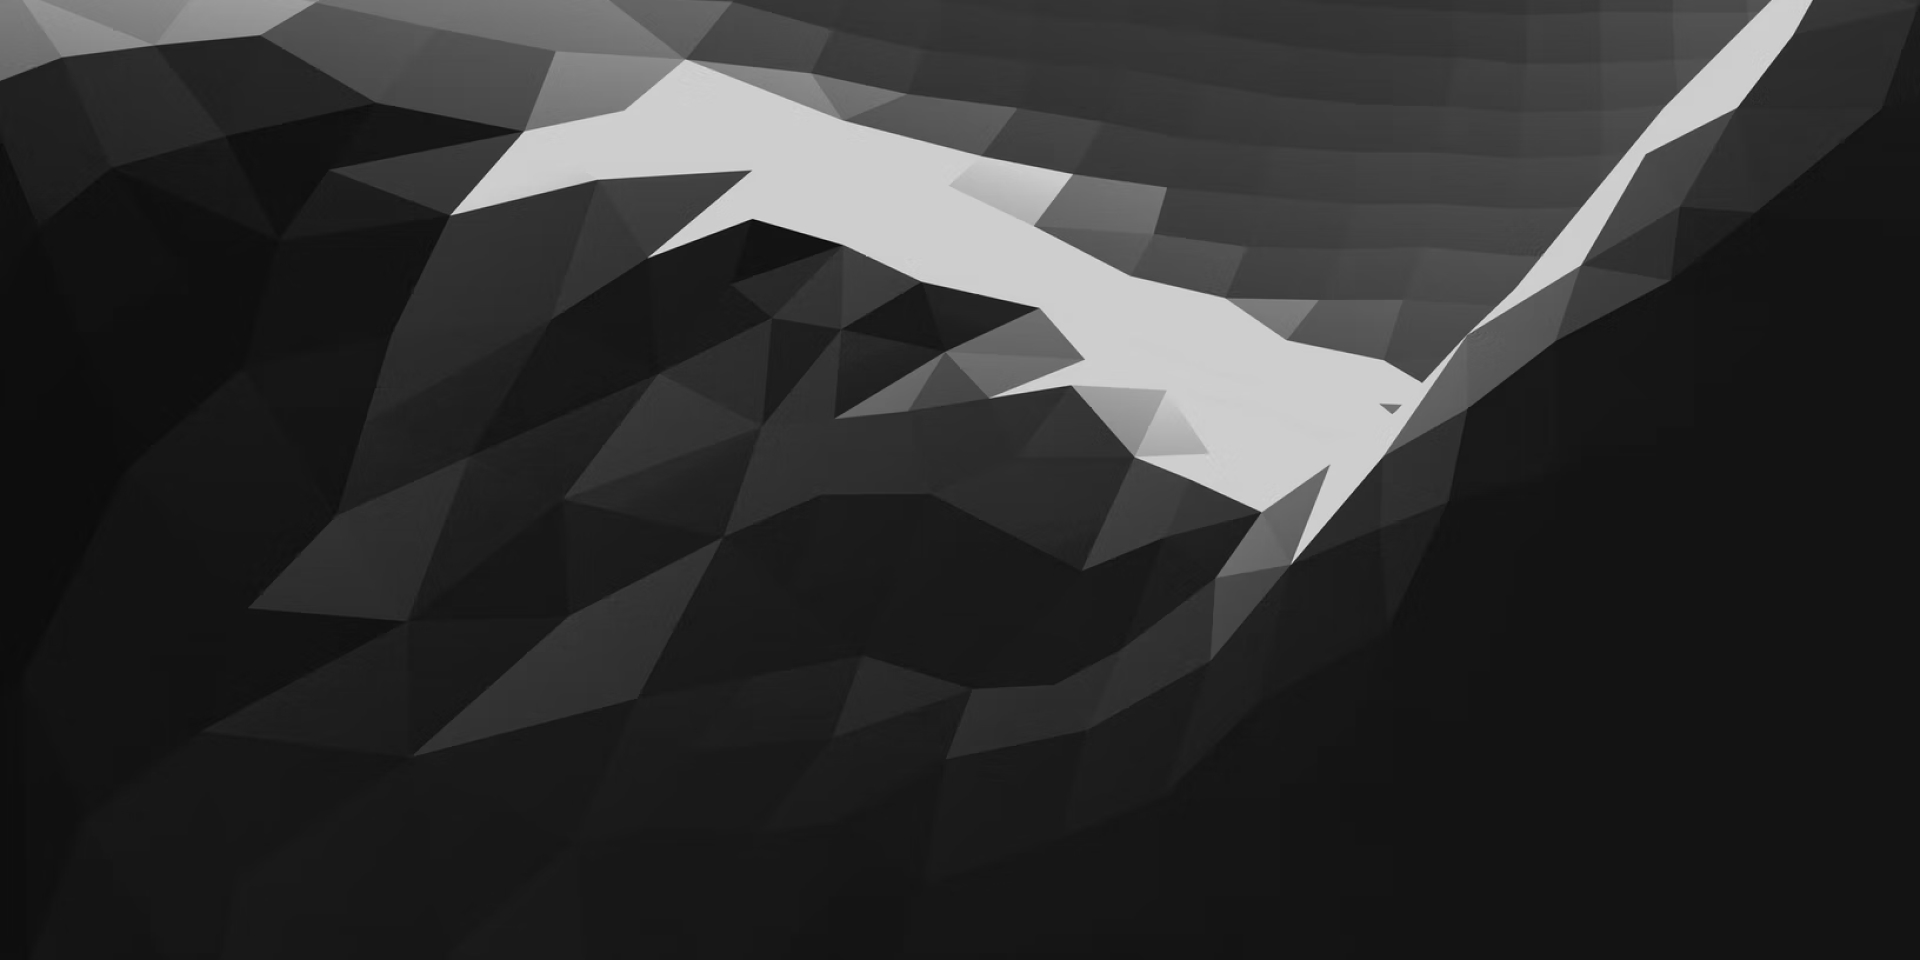 Illustration of pixelated mountains